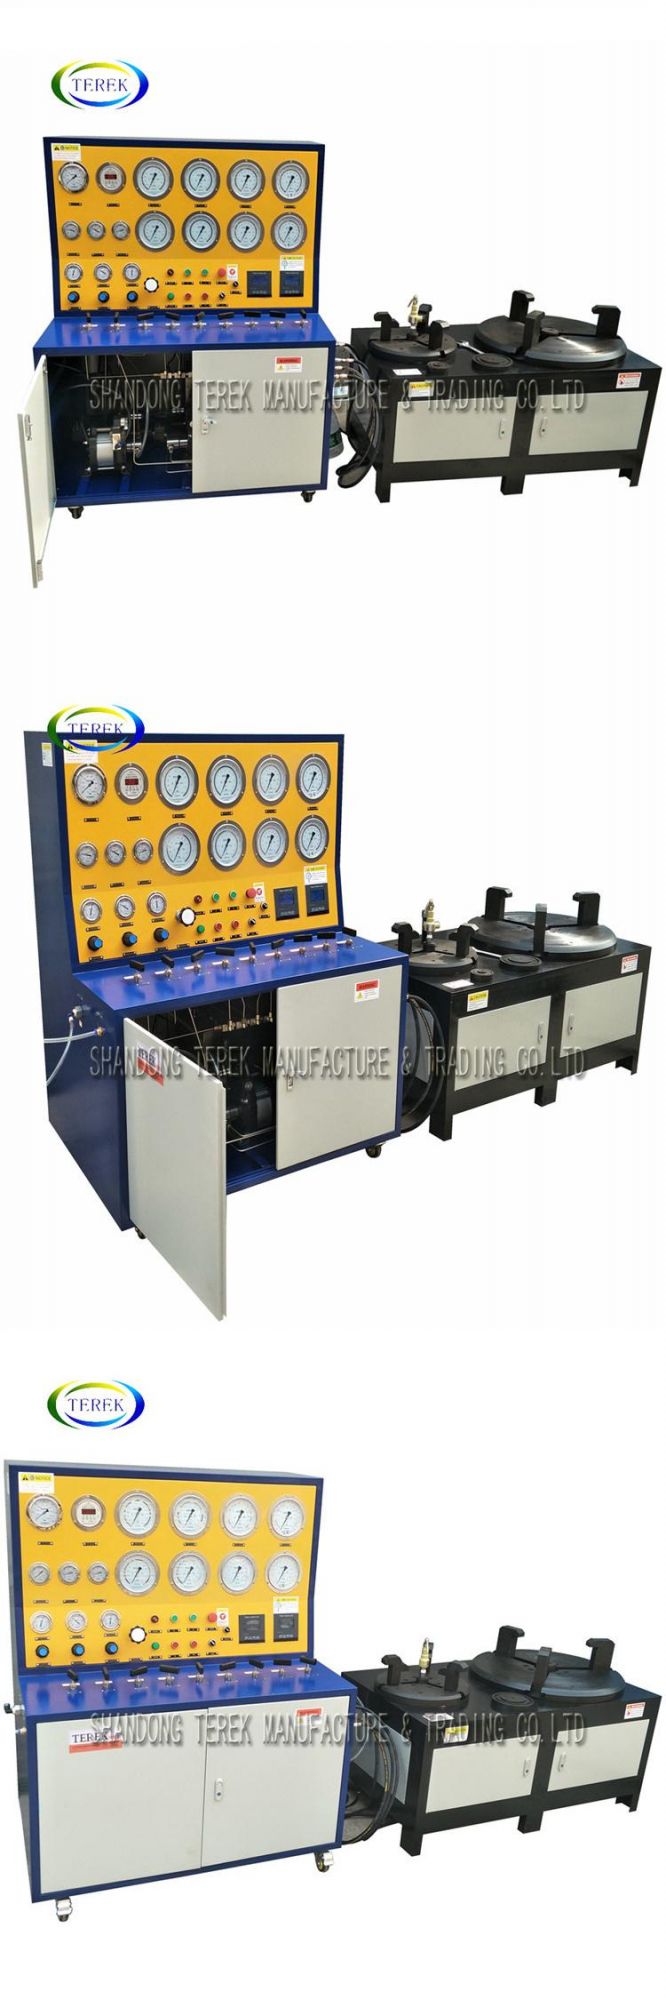 Professional Factory Supply 100 Psi-90000 Psi Range High Pressure Valve Test Equipment